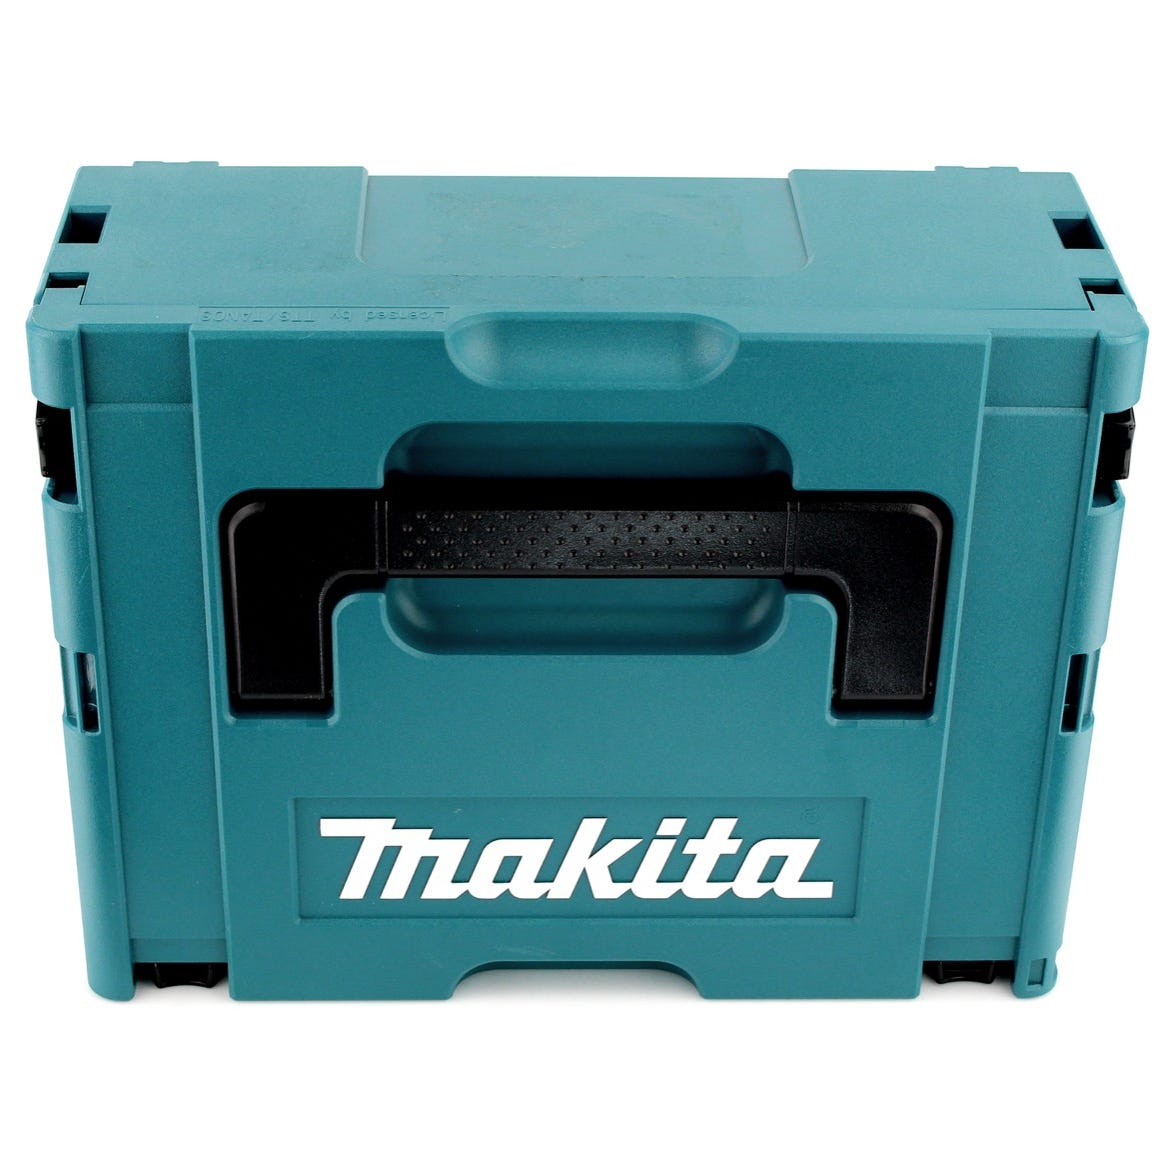 Makita DJV 182 RG1J Scie sauteuse sans fil 18V Brushless + 2x Batteries 5,0Ah + Chargeur + Coffret 2